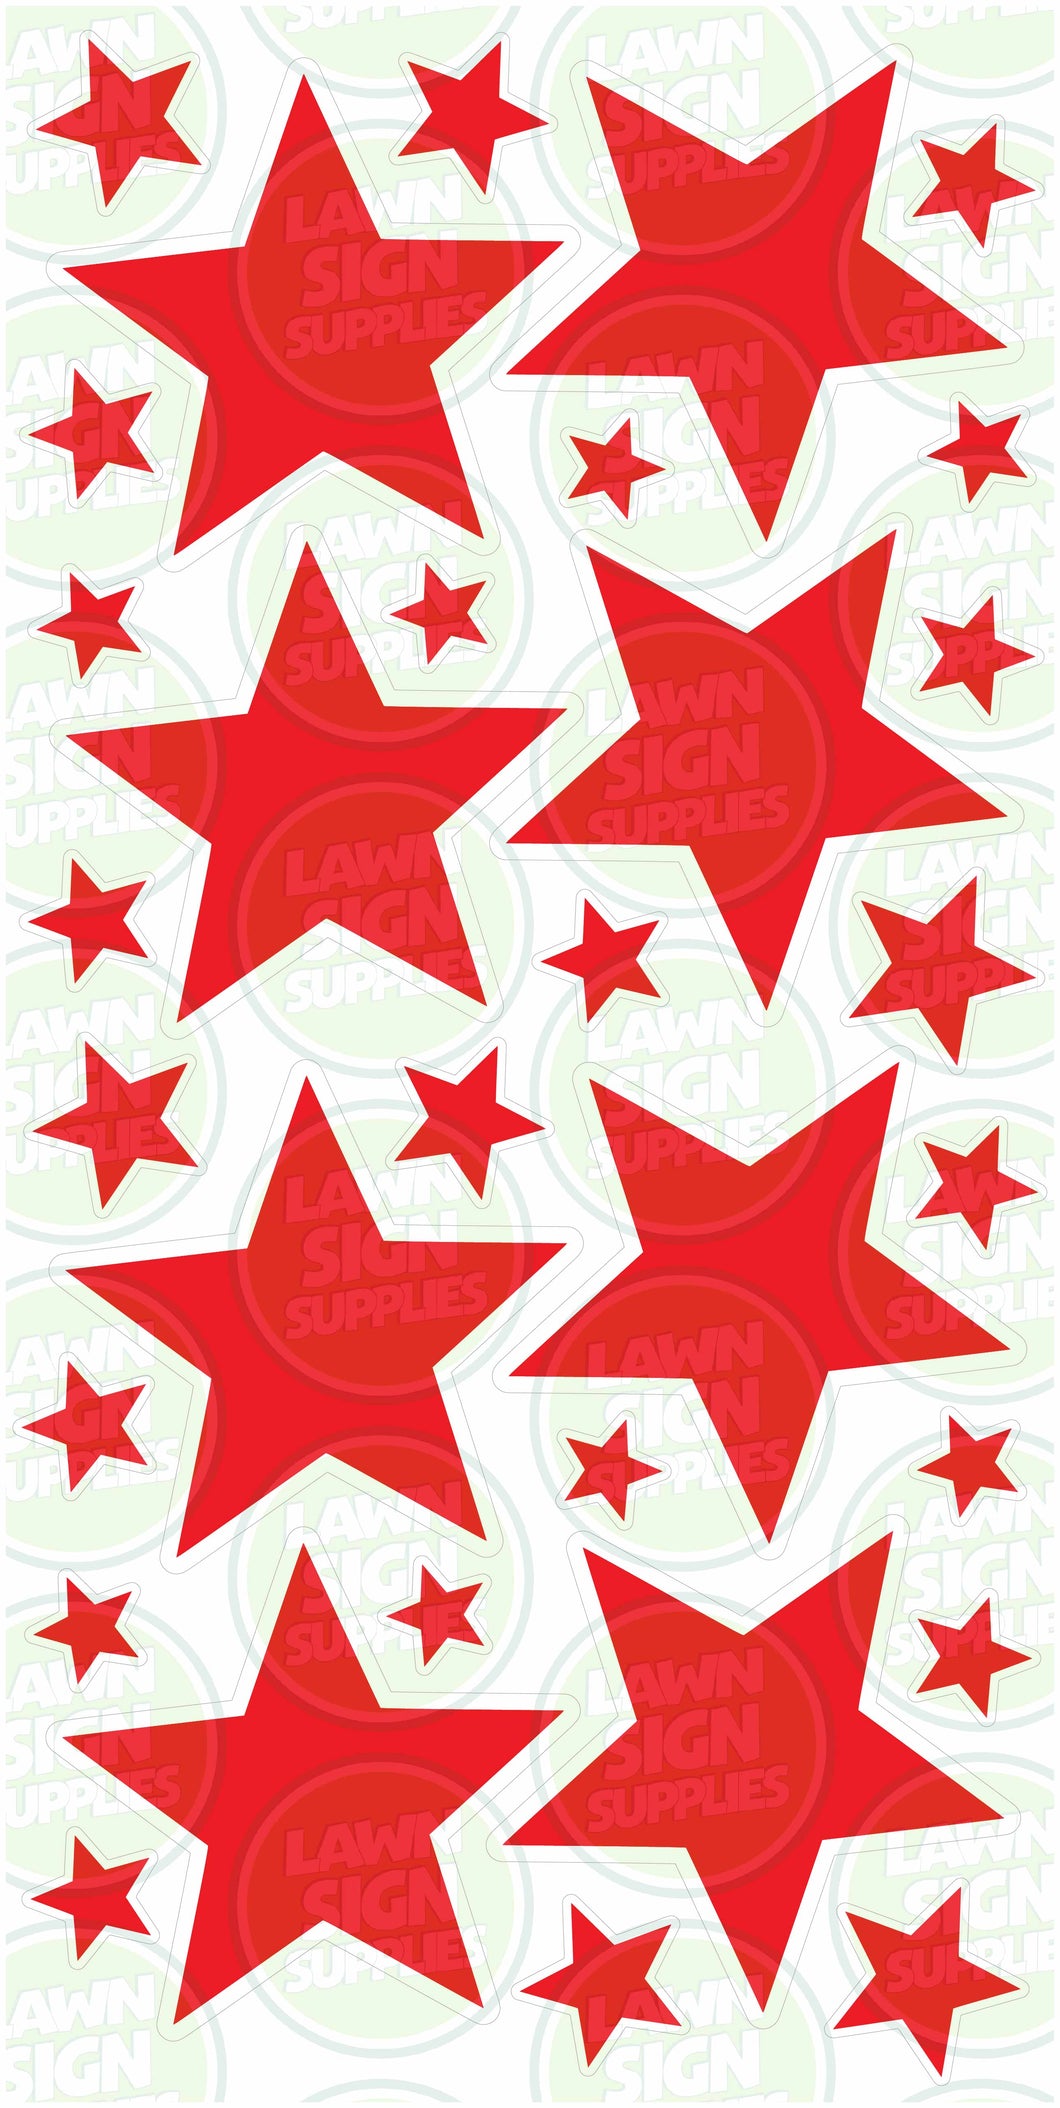 STARS - RED